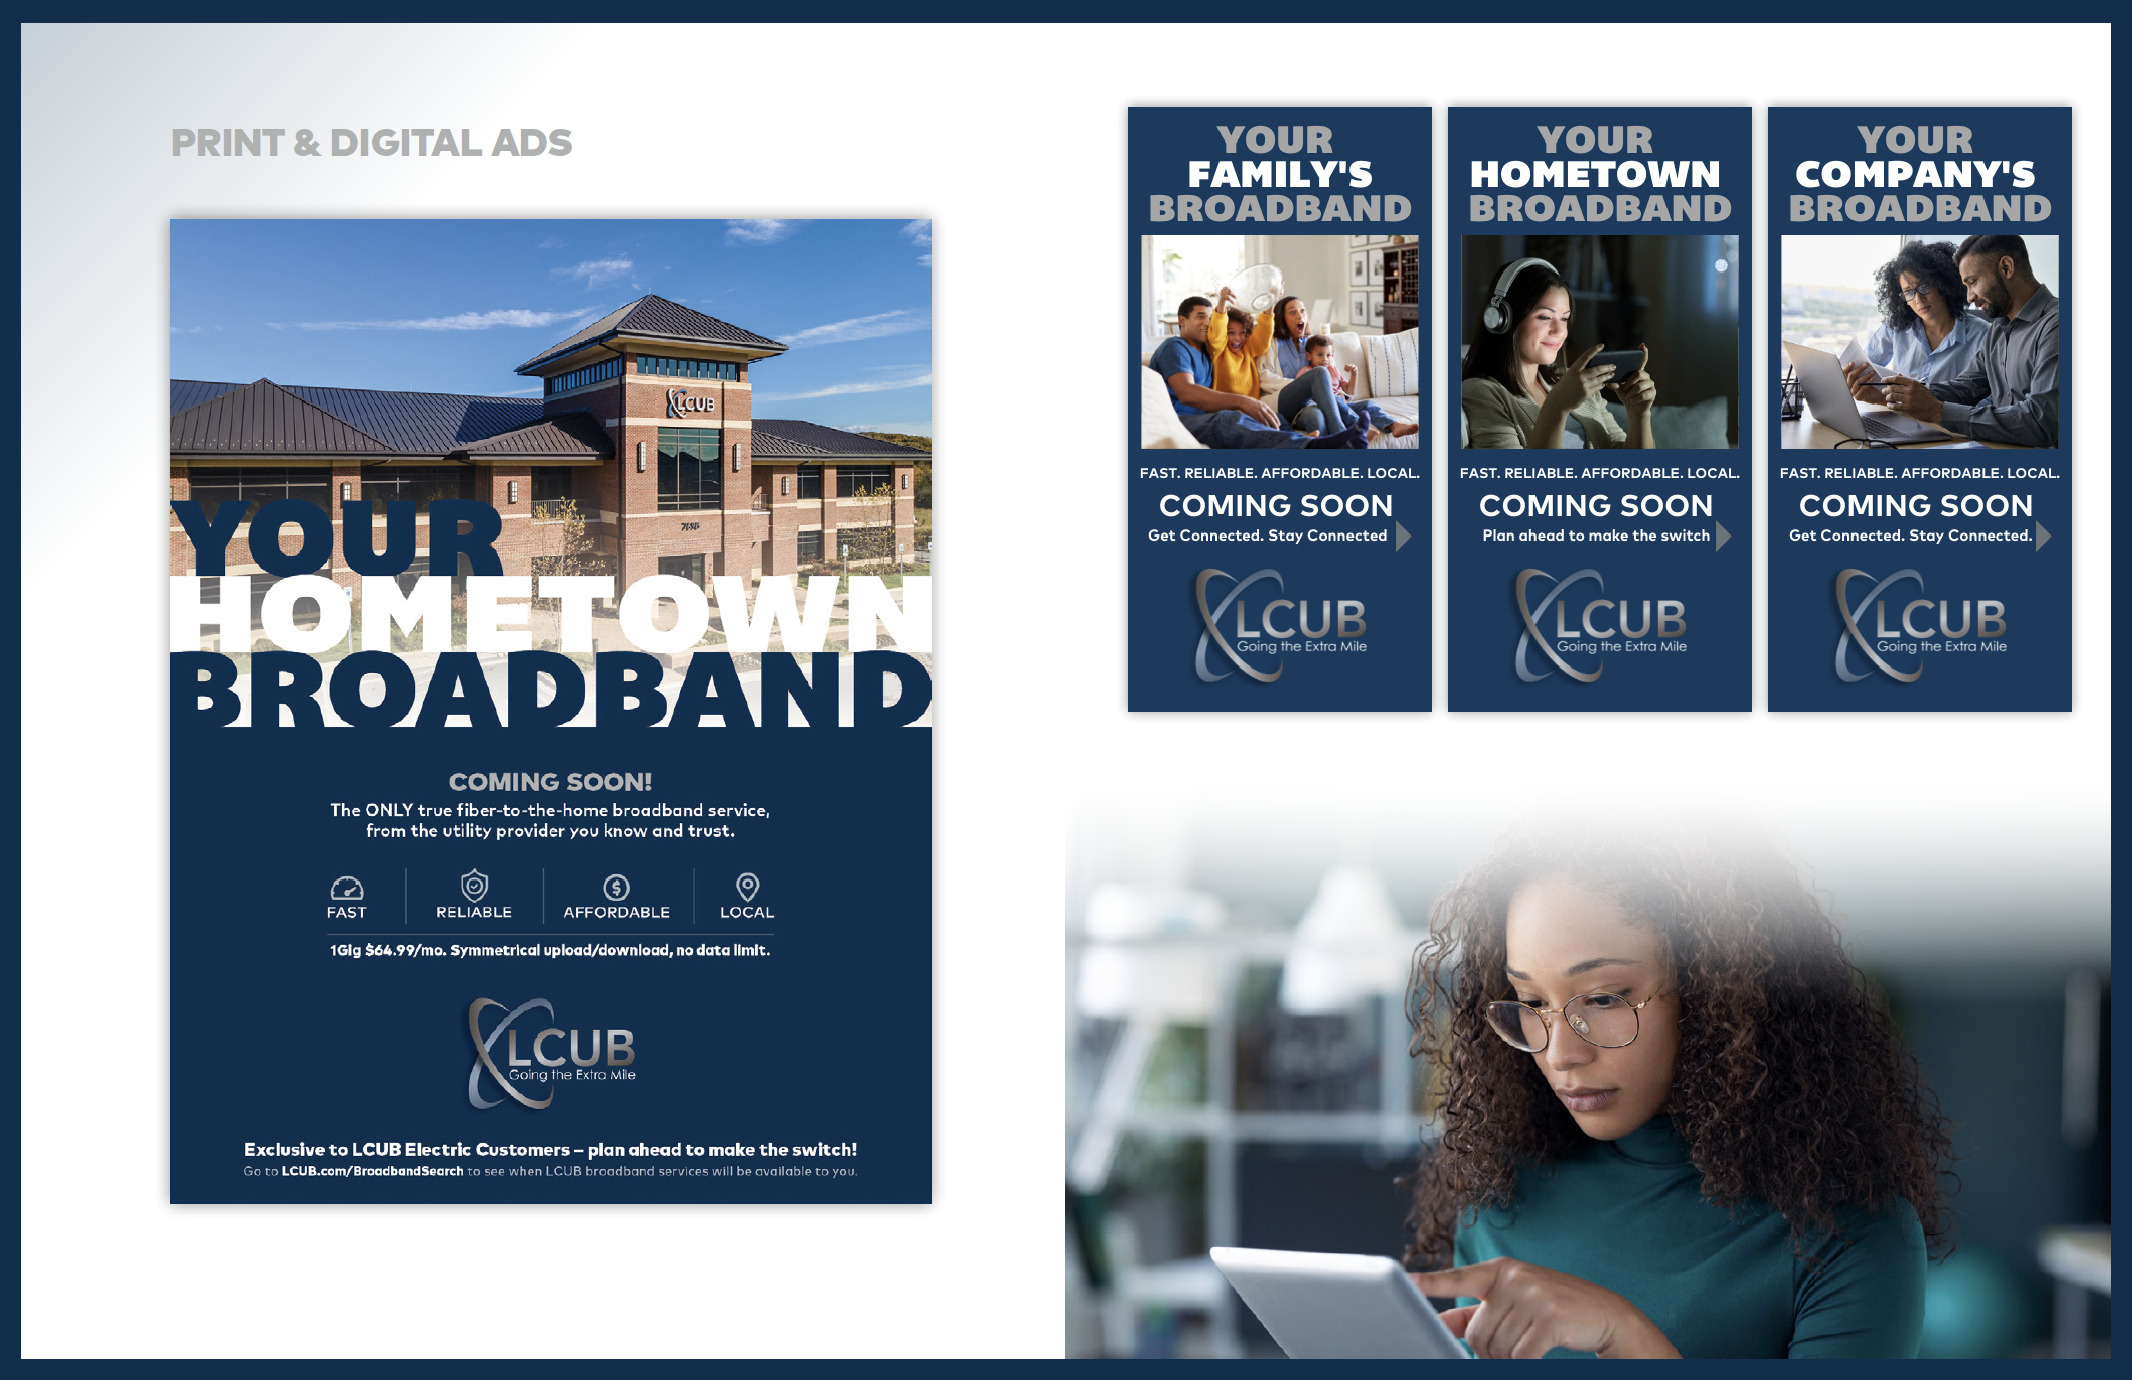 examples of broadband print & digital ads